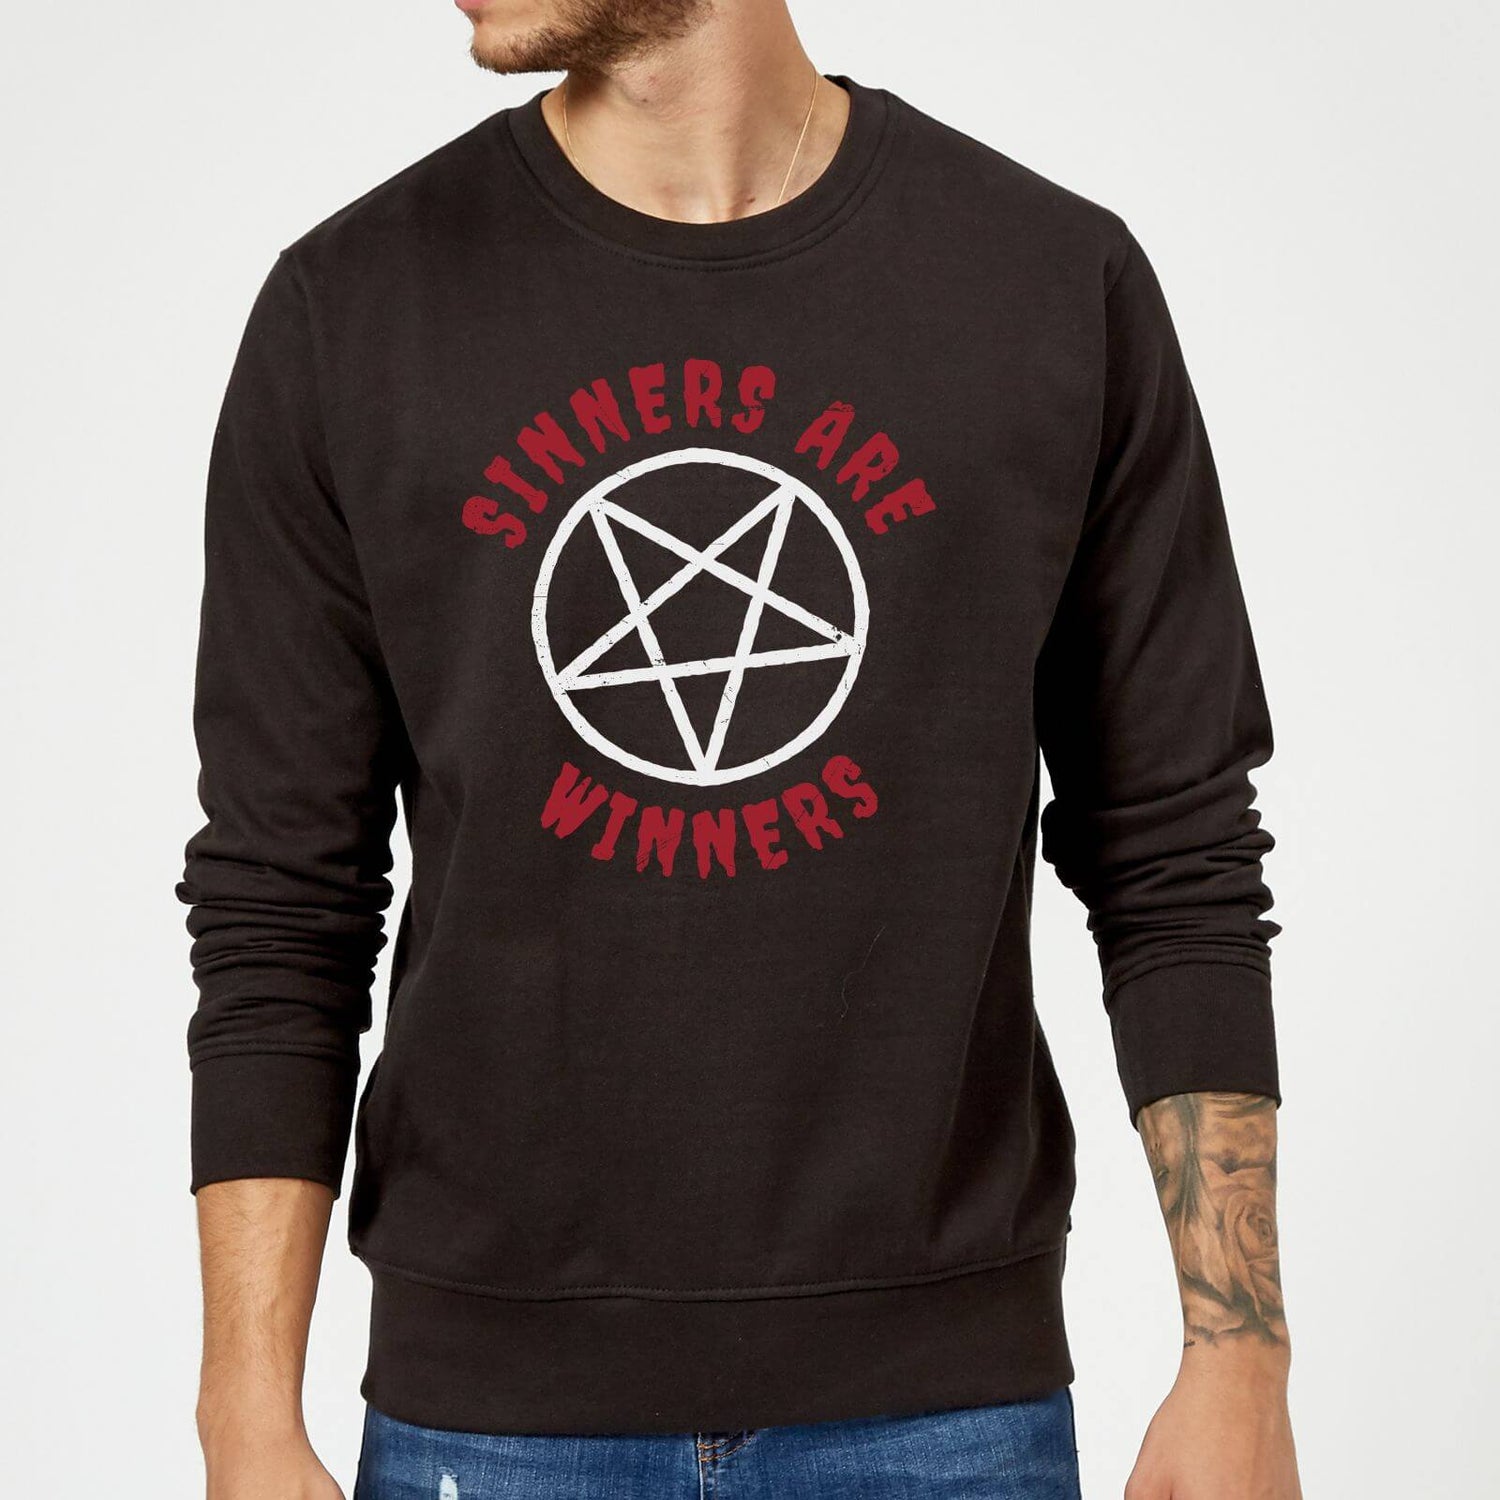 Sinners are Winners Sweatshirt - Black